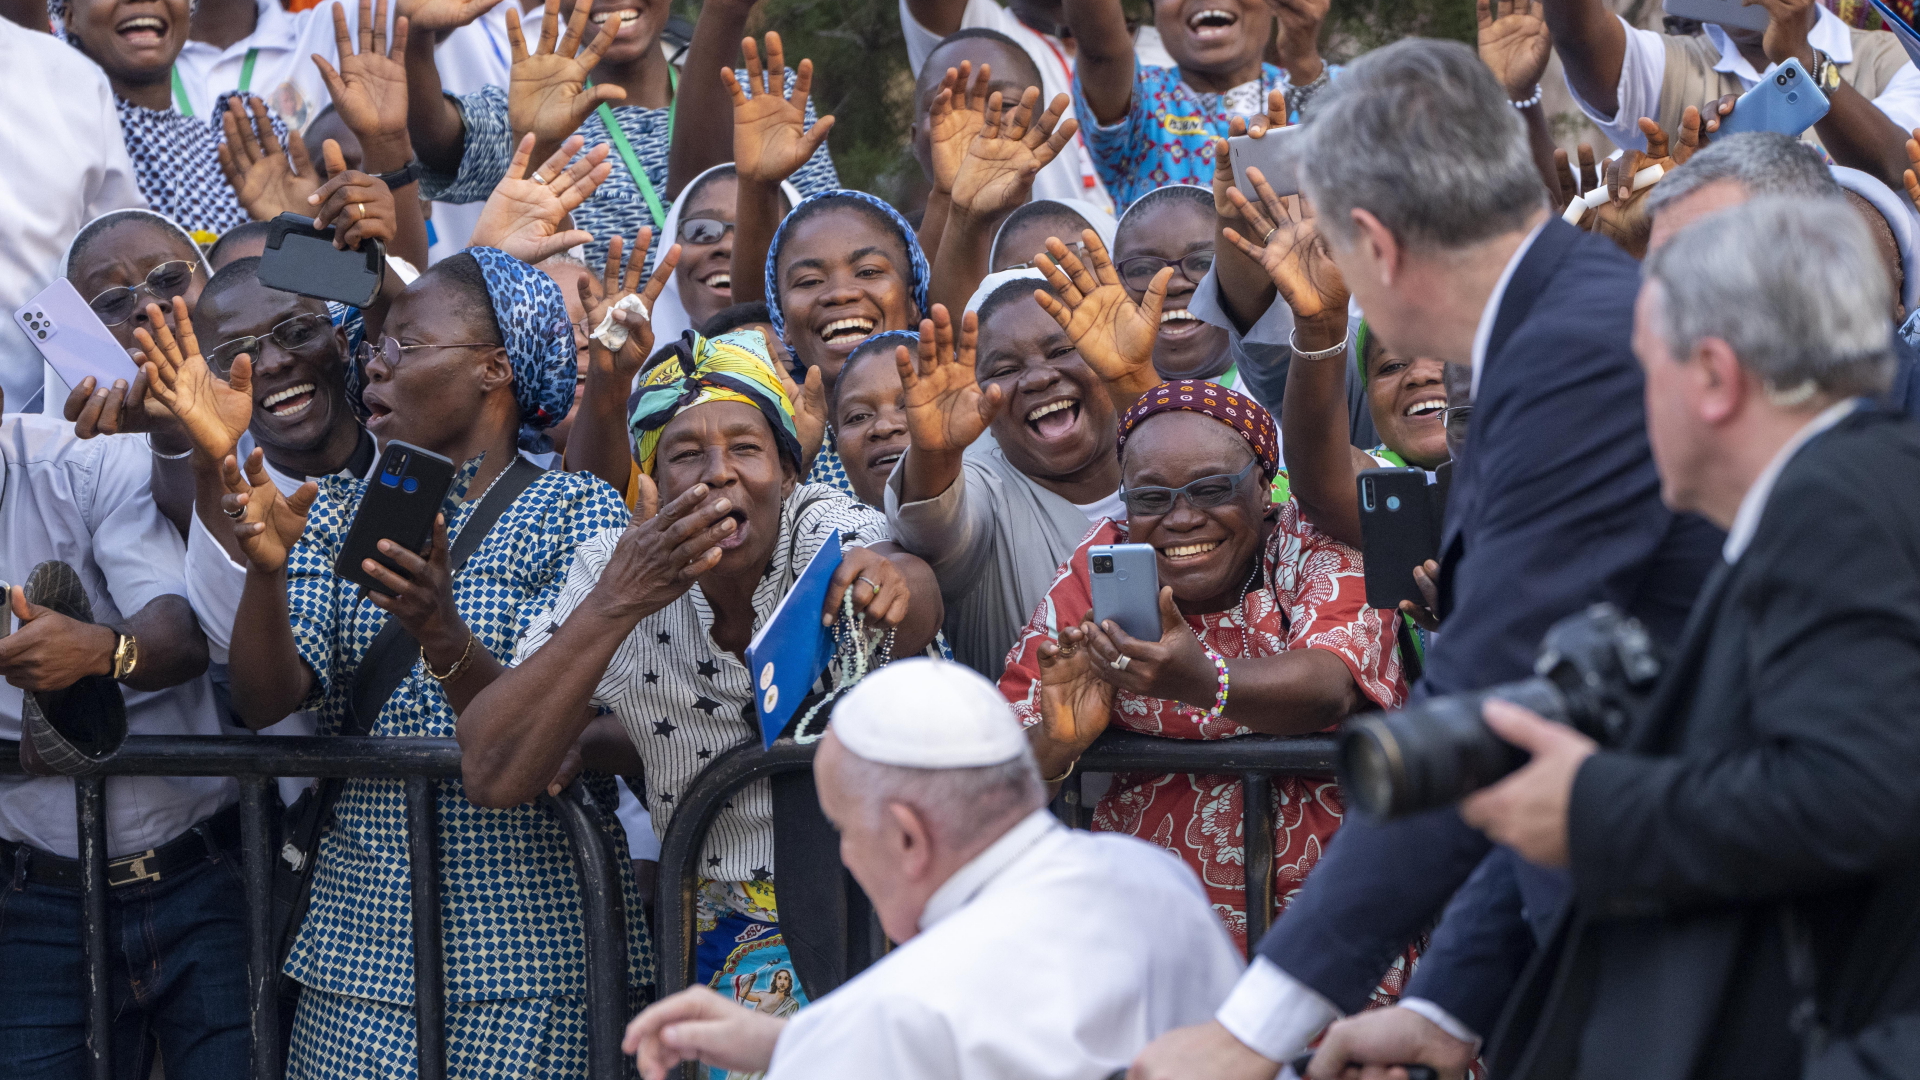 Papst Franziskus begrüßt Gläubige in der Demokratischen Republik Kongo. | dpa